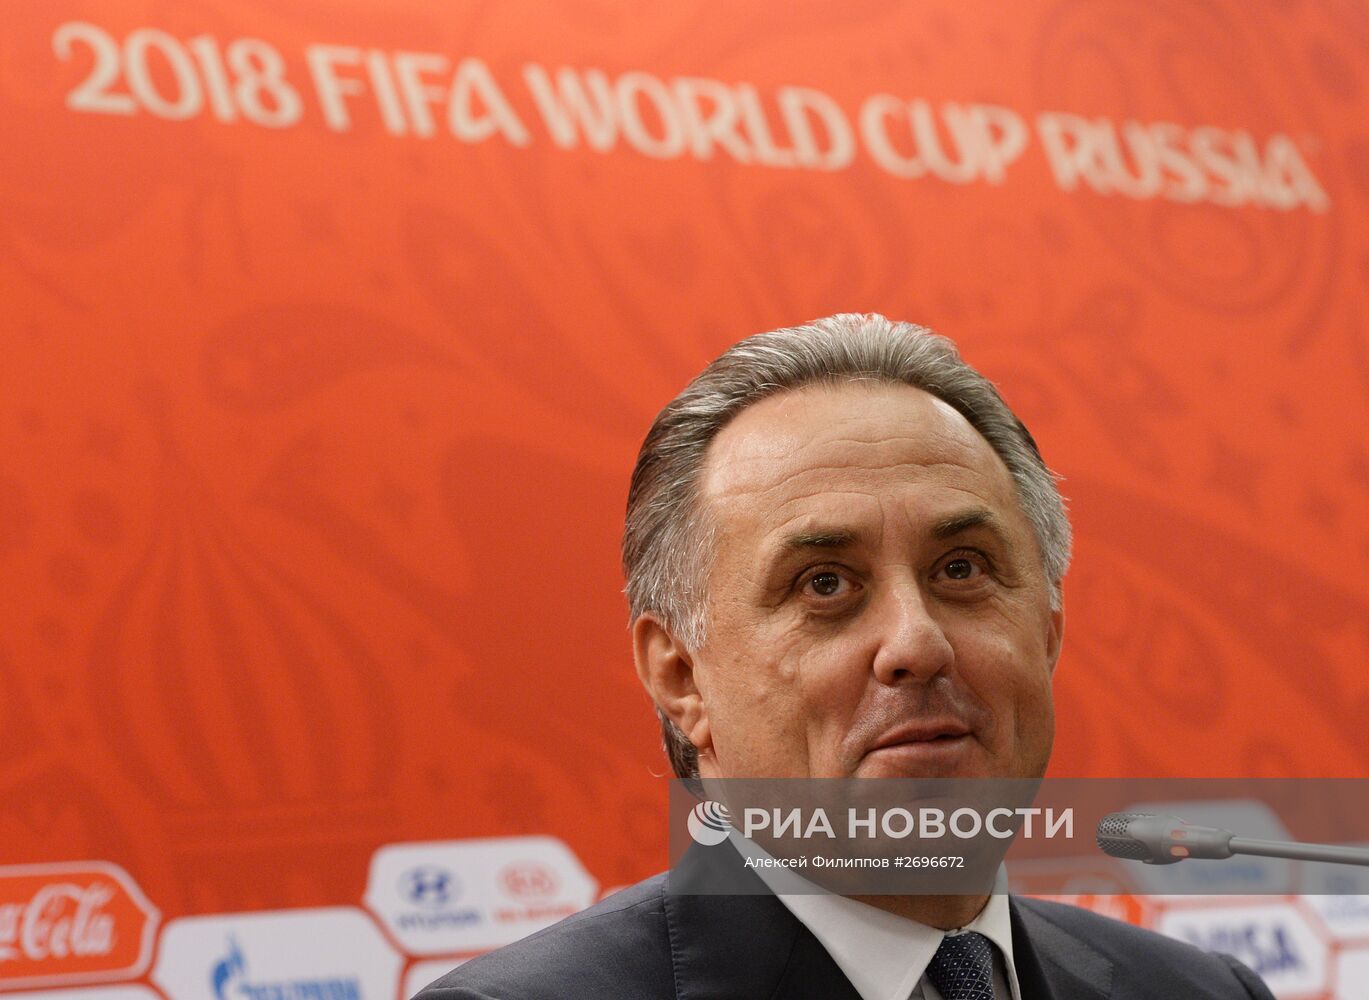 Пресс-брифинг по итогам визита FIFA и Оргкомитета "Россия-2018" на стадионы ЧМ-2018